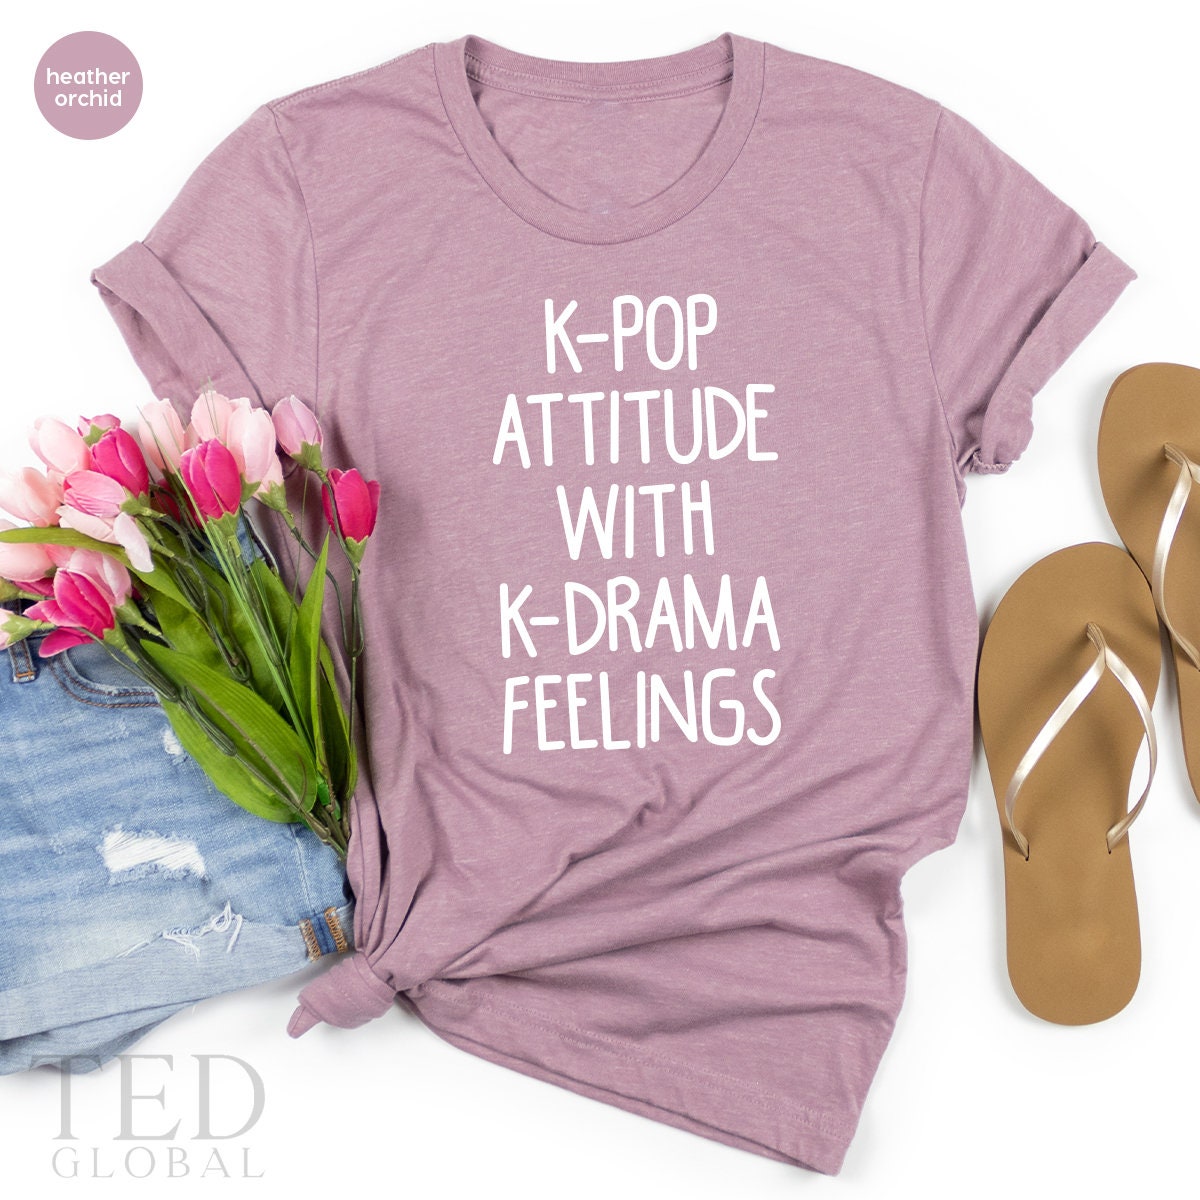 K-pop Lover Shirt, Kpop TShirts, Drama Addict T Shirt, K-pop Attitude With K-Drama Feelings Shirt, Korean Drama Tees, Gift For Korea Lover - Fastdeliverytees.com